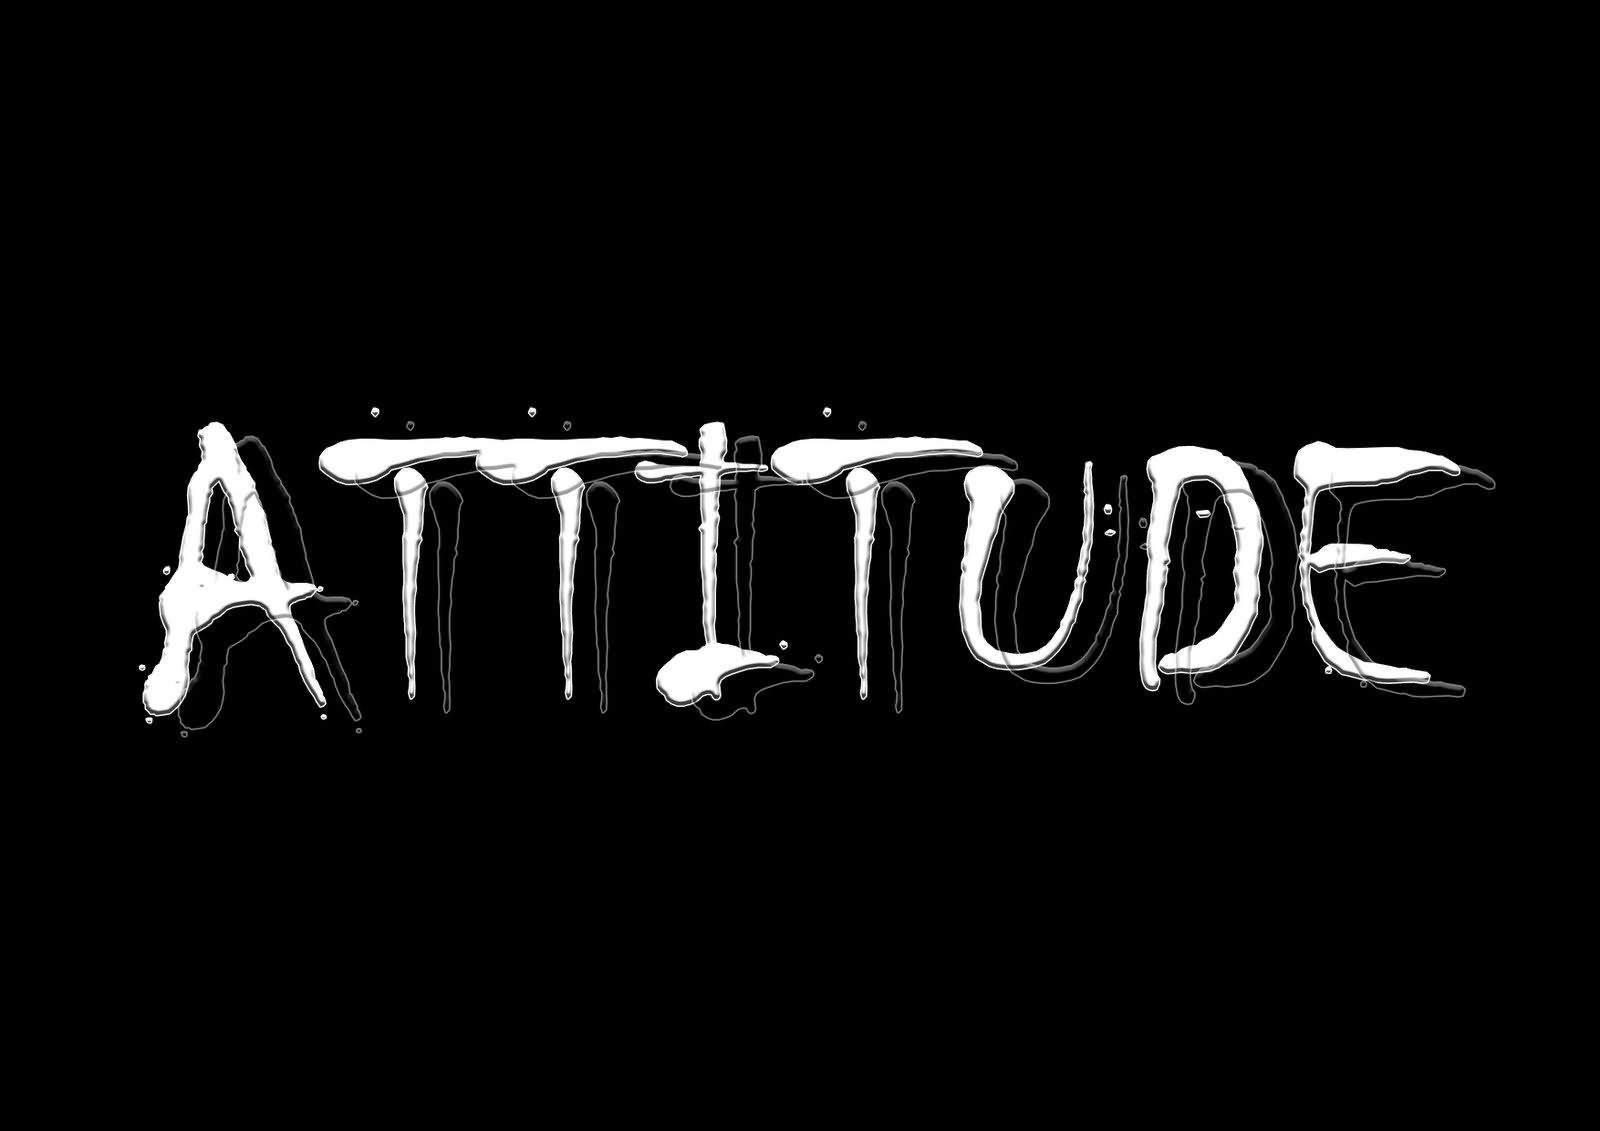 Attitude Wallpapers